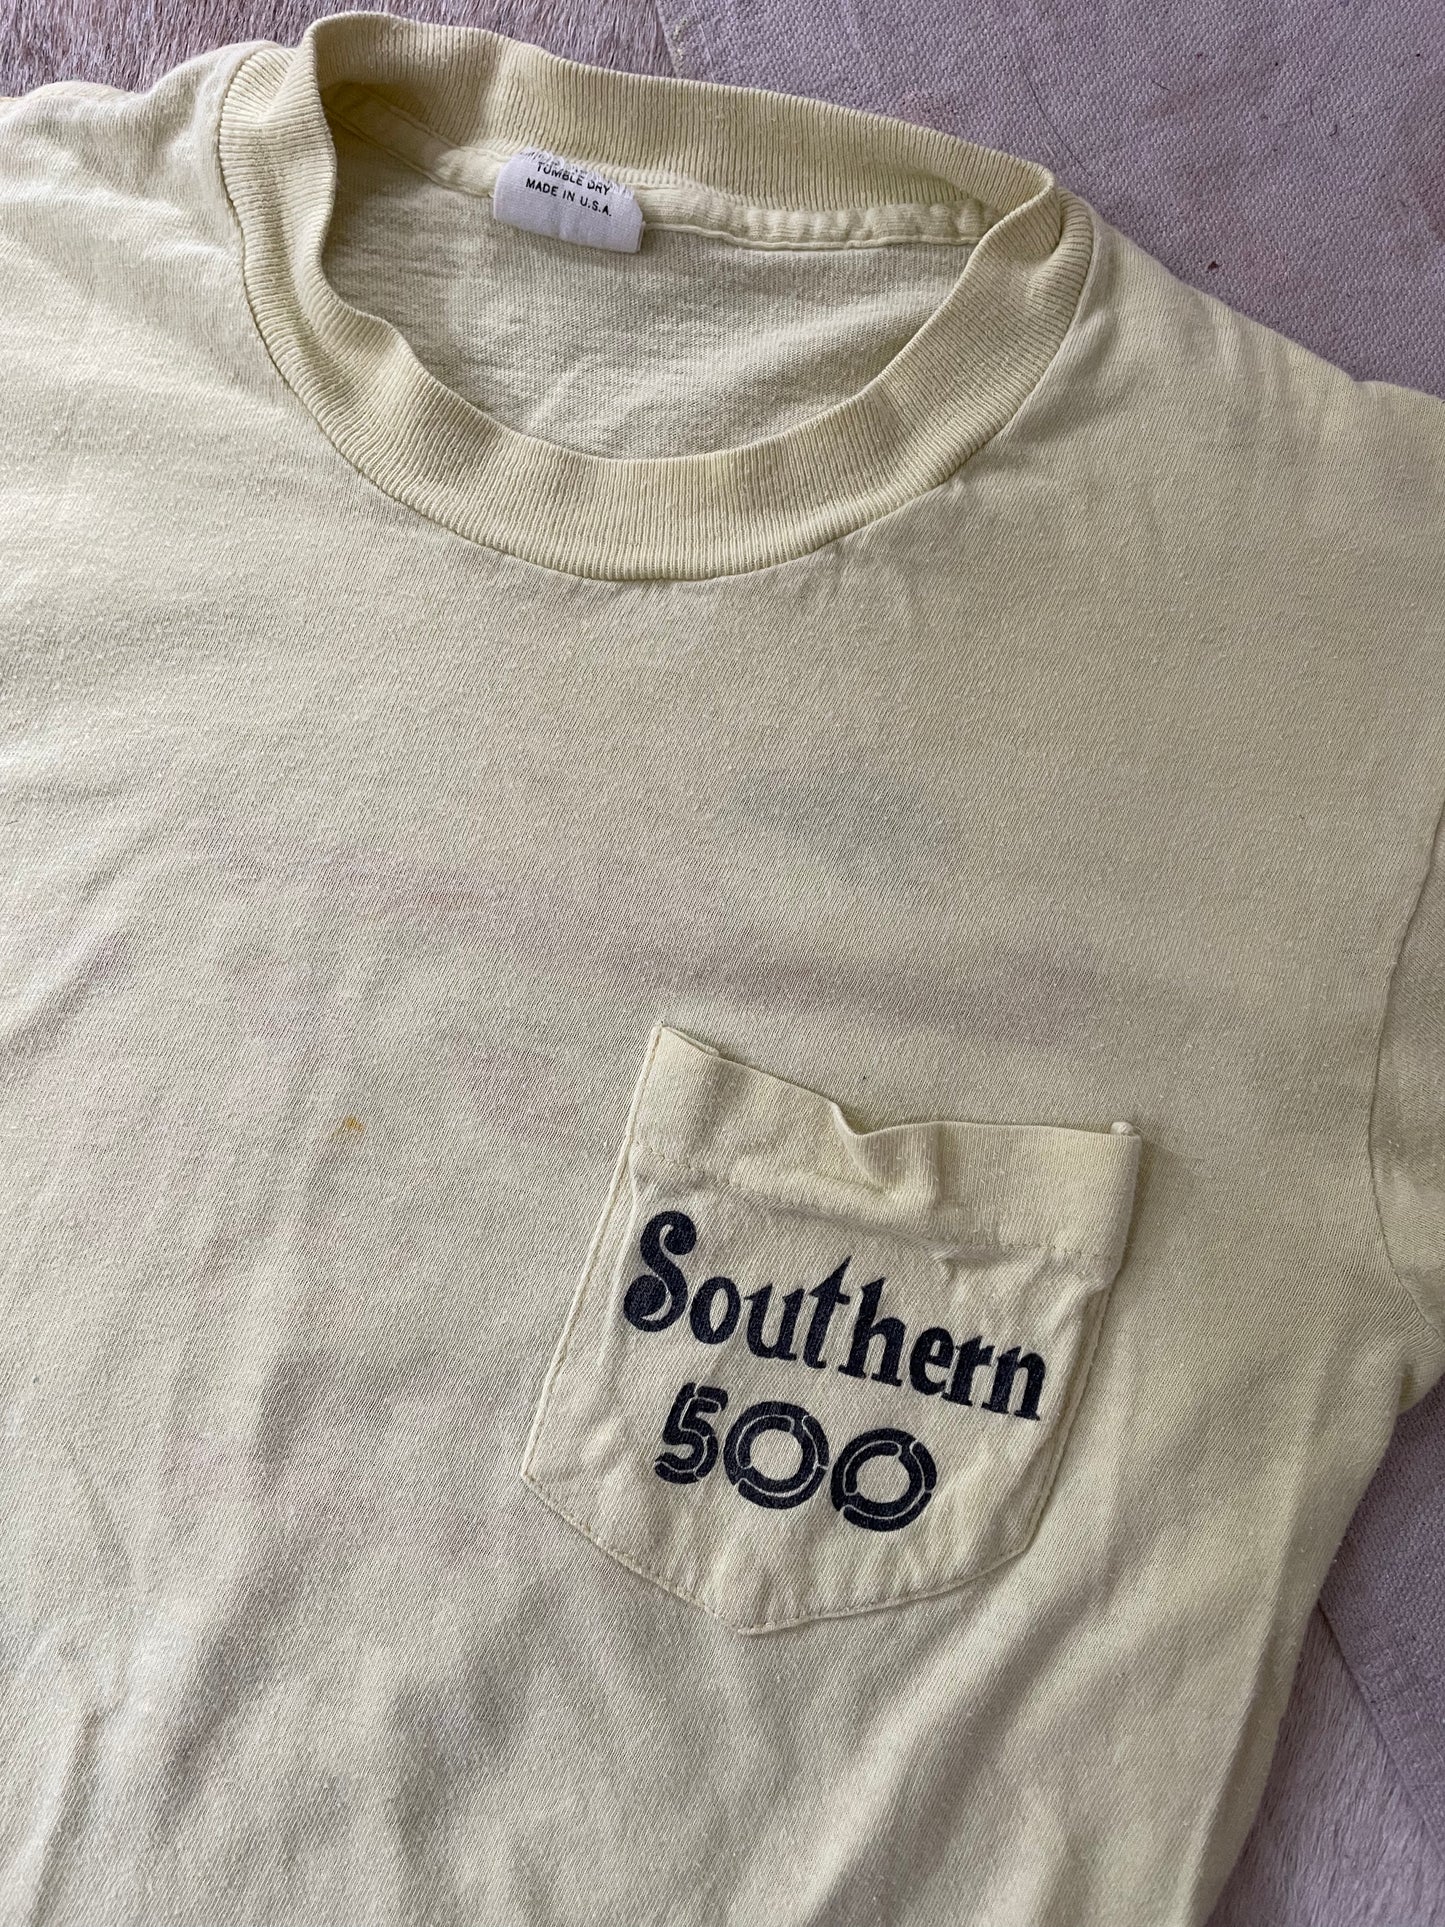 80s Southern 500 Darlington International Raceway Pocket Tee